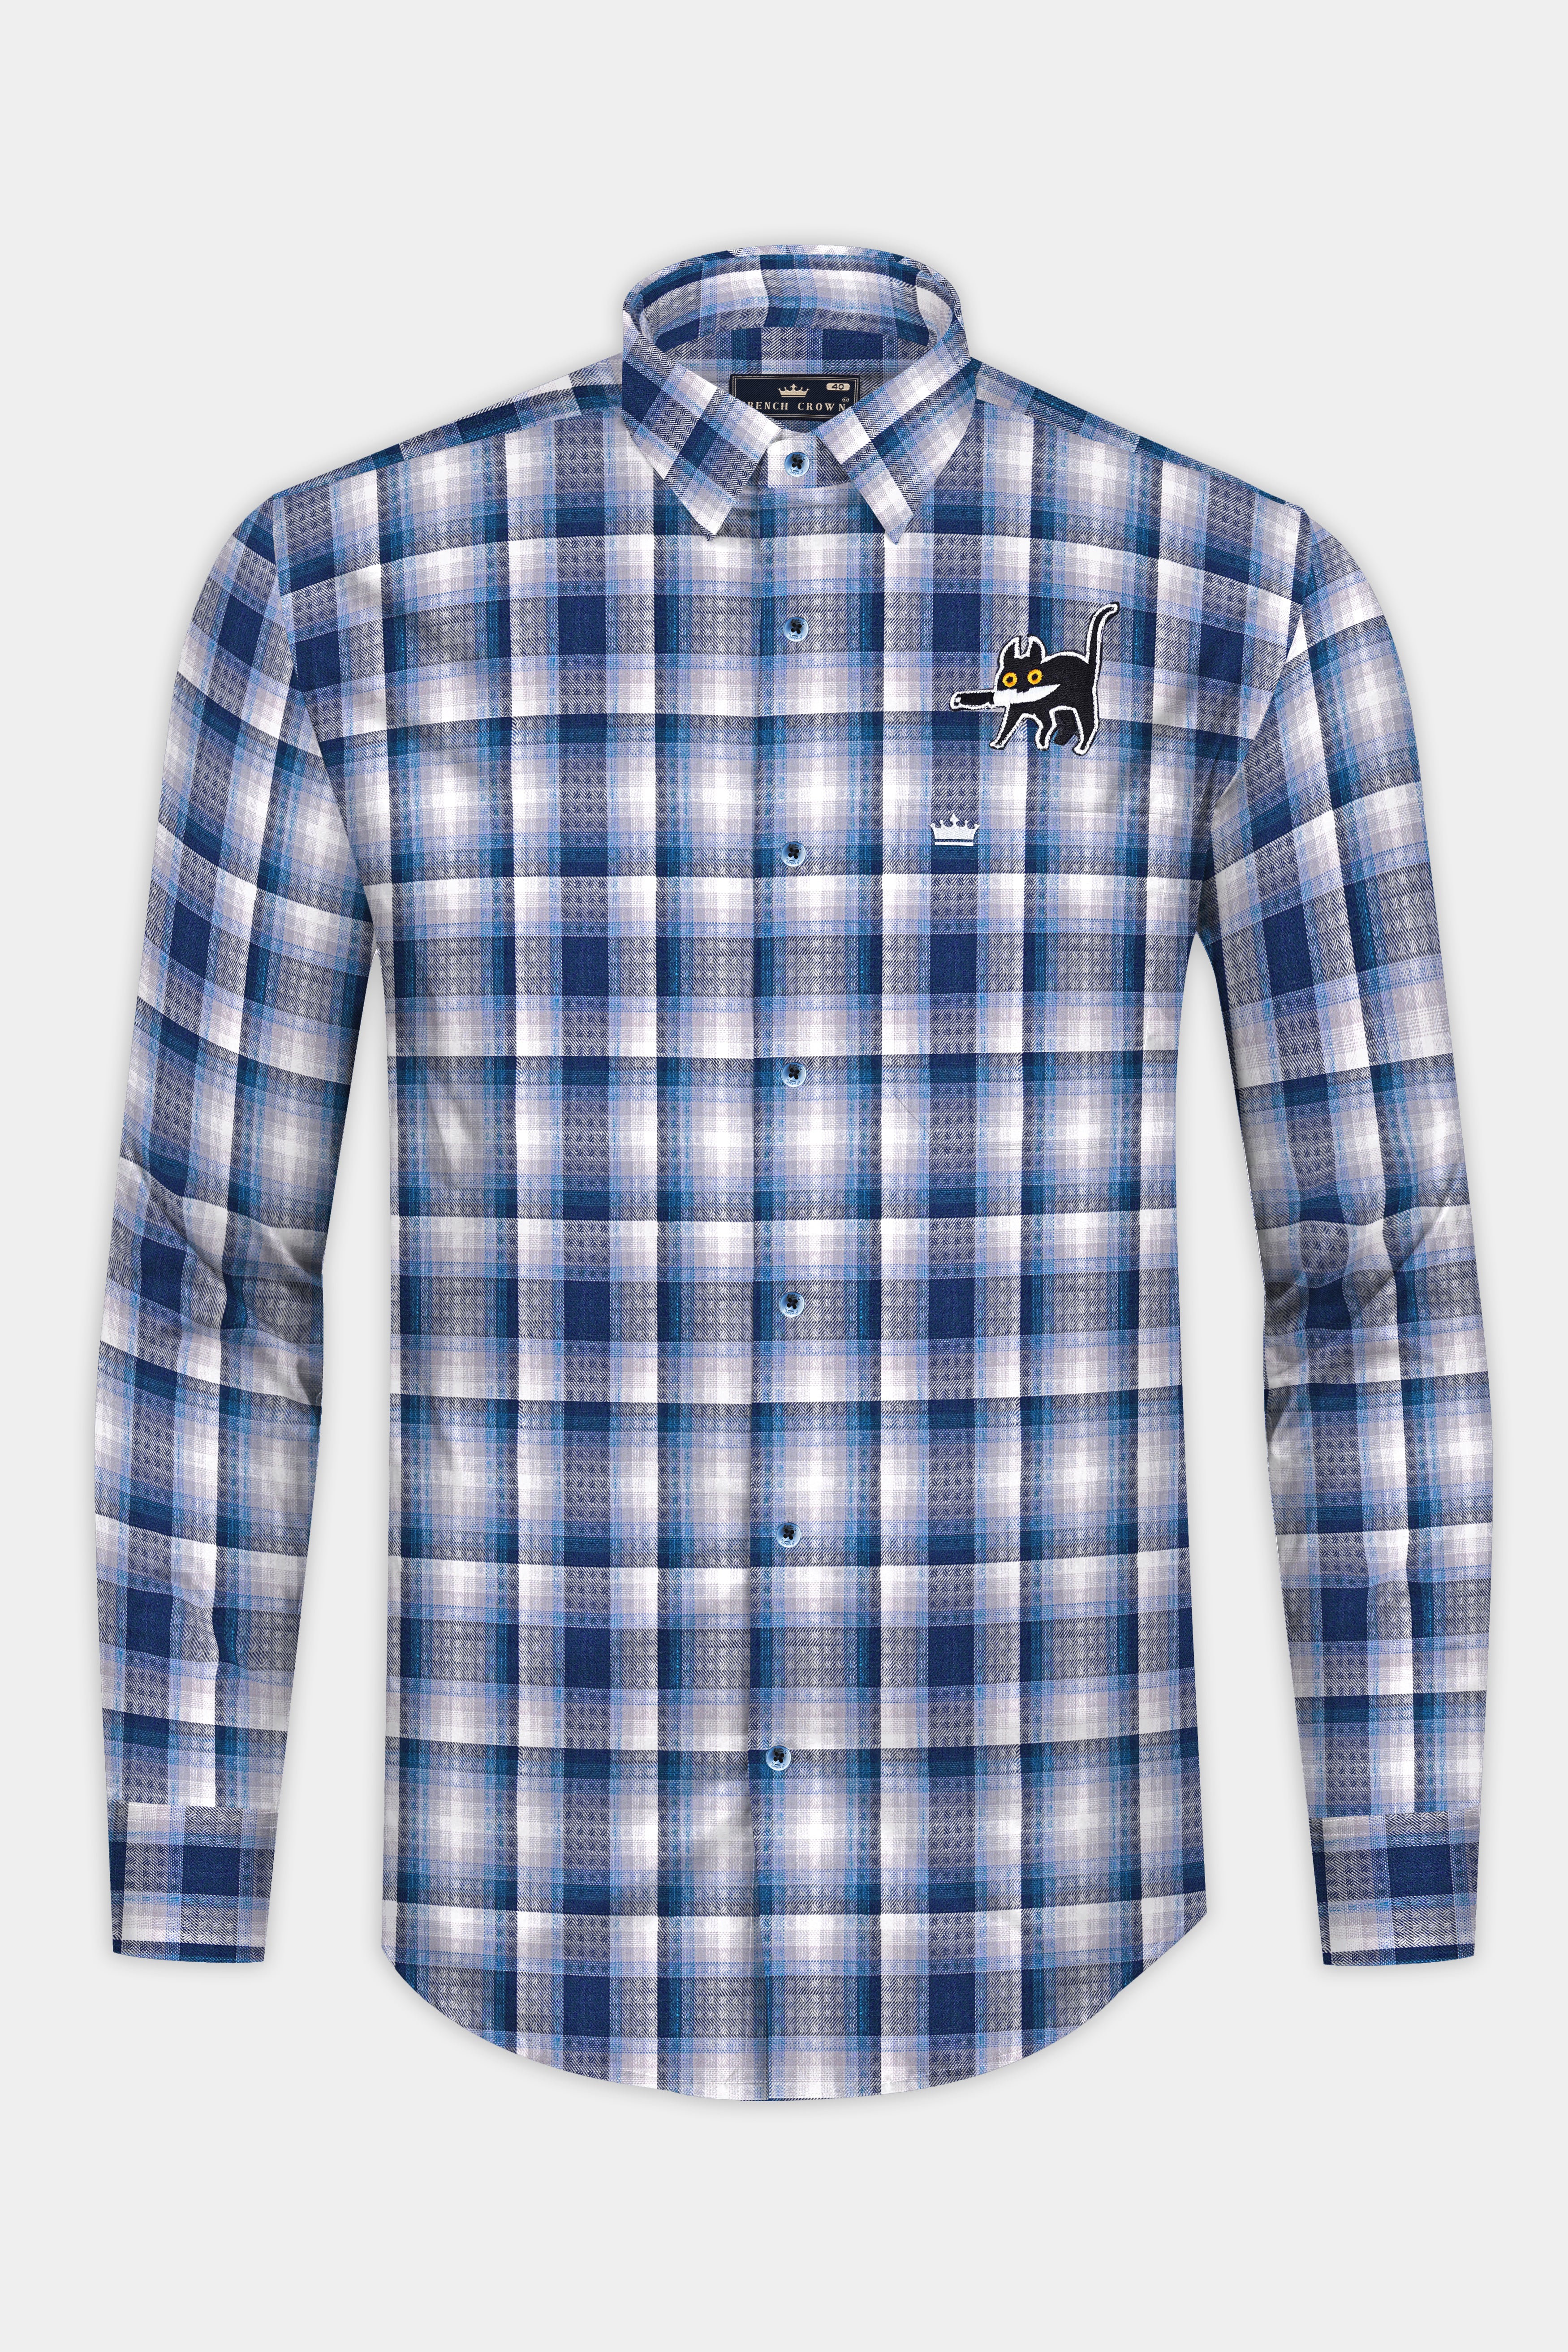 Rhino Blue and White Plaid with Animated Creature Patchwork Twill Premium Cotton Designer Shirt